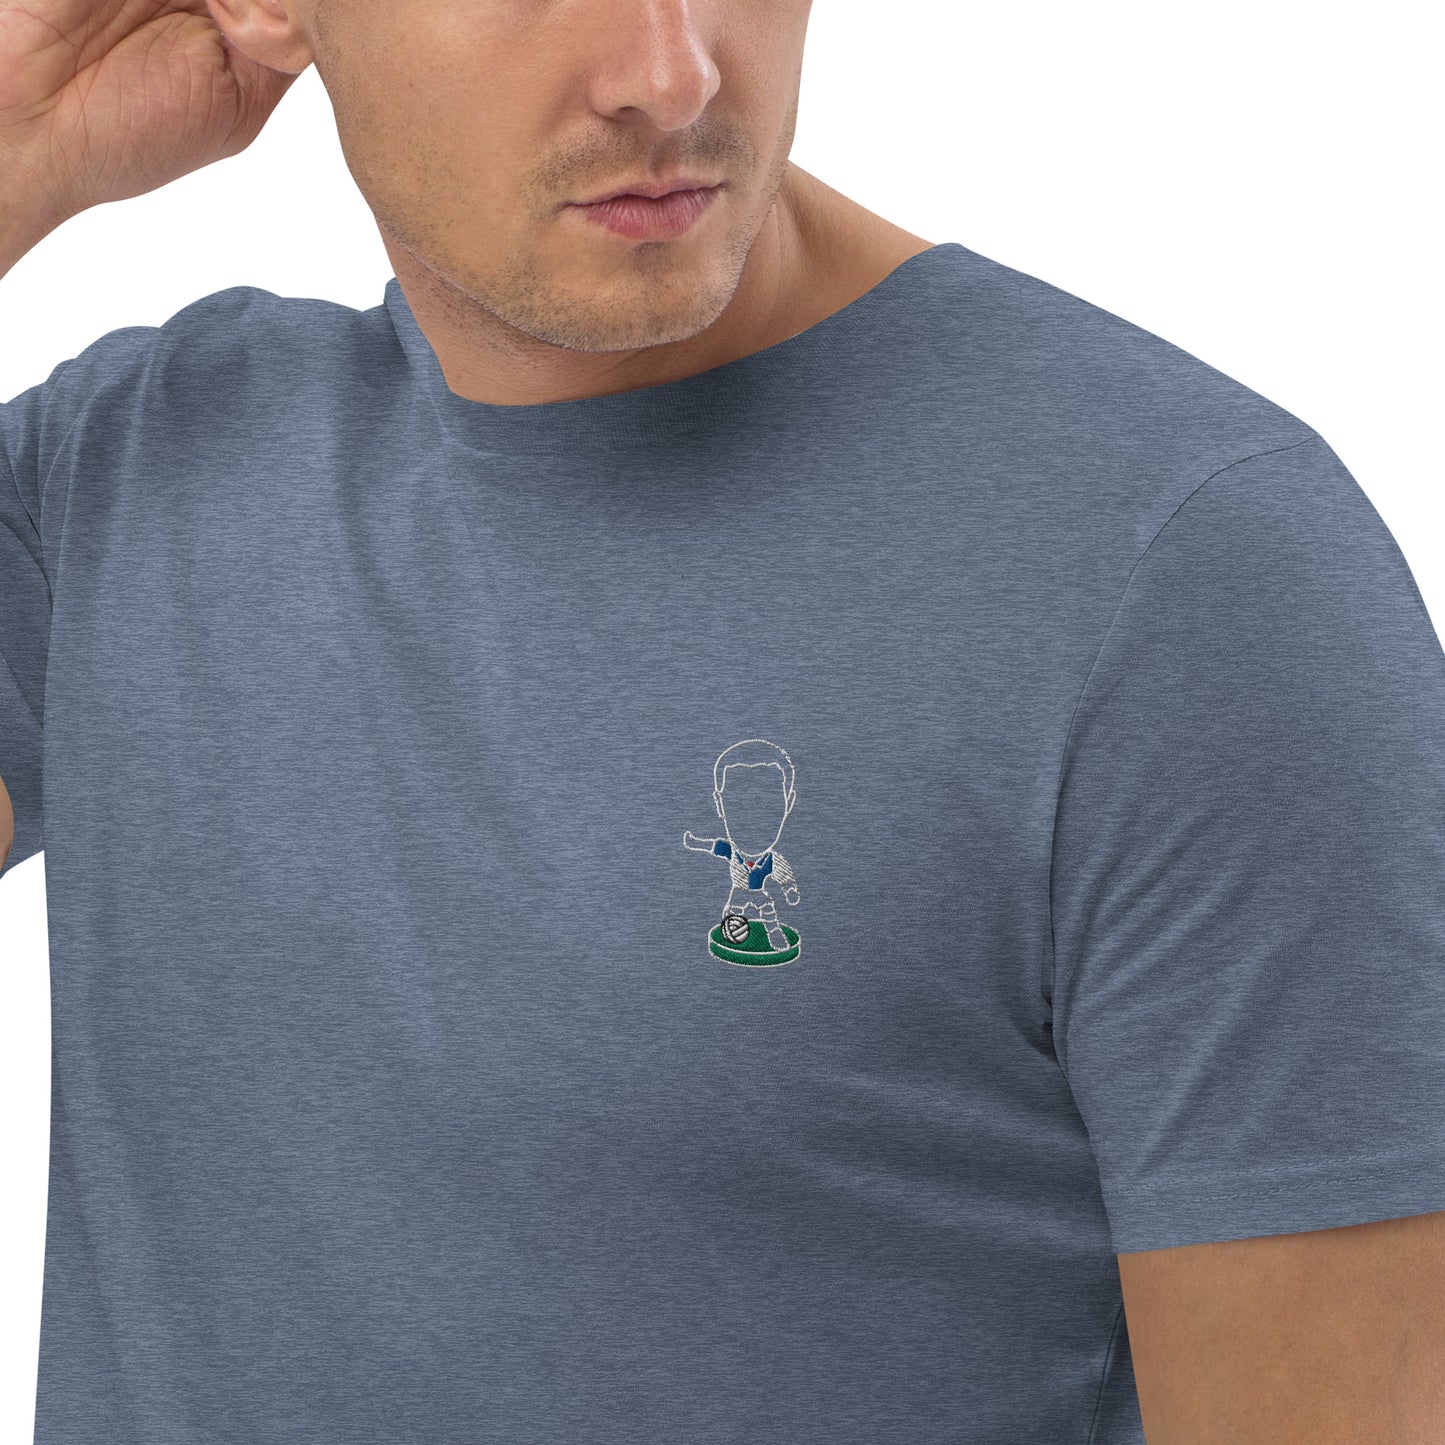 Lancashire Pride (White Outline) Blackburn Rovers Inspired Design - Embroidered - Unisex Football Organic Cotton T-Shirt